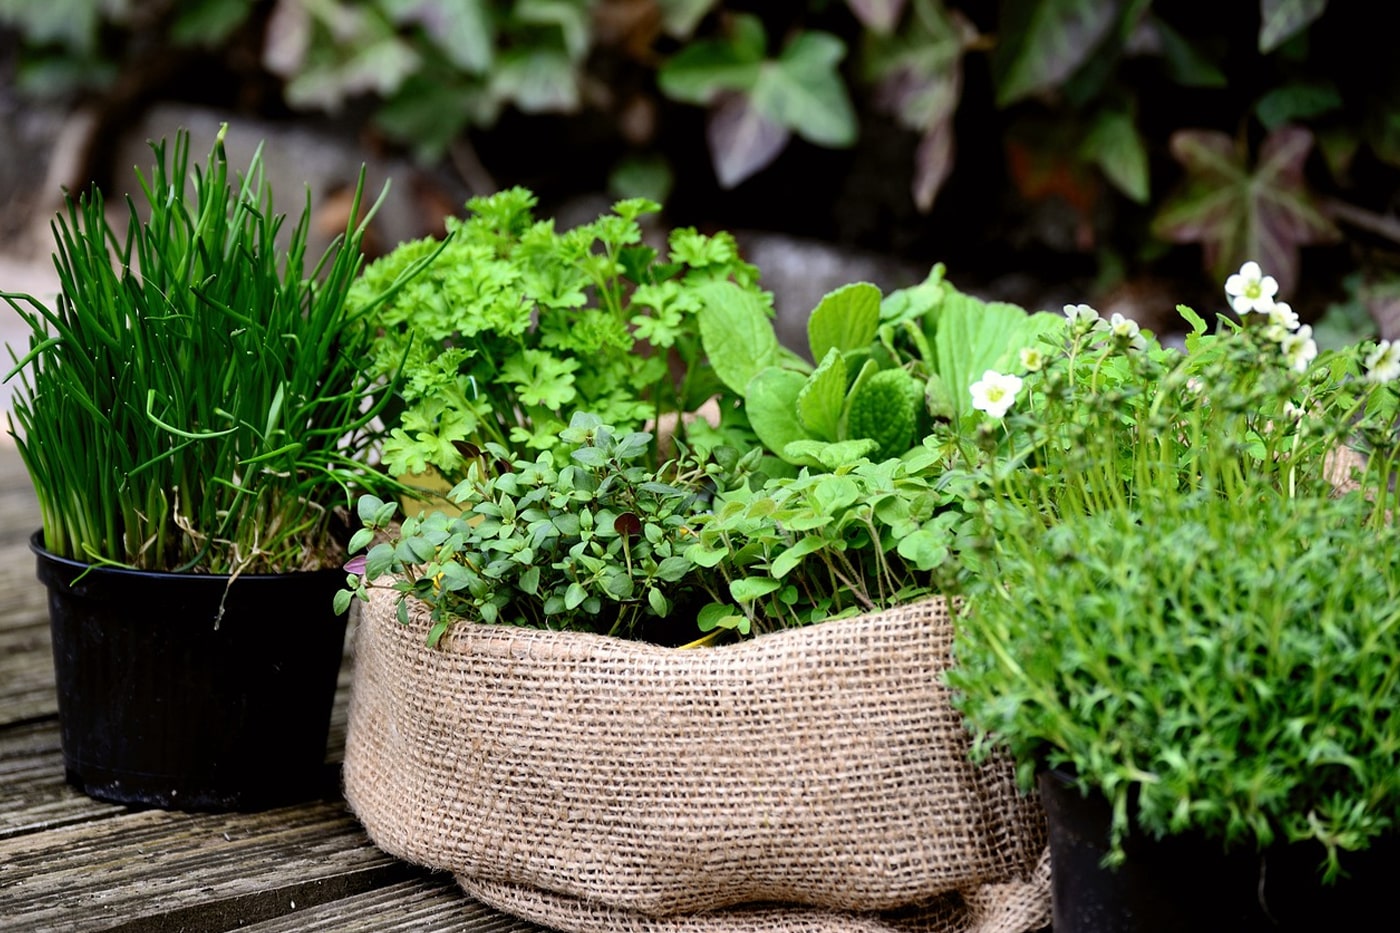 Edimentals Gardening: Edible and Ornamental Plants for Your Garden